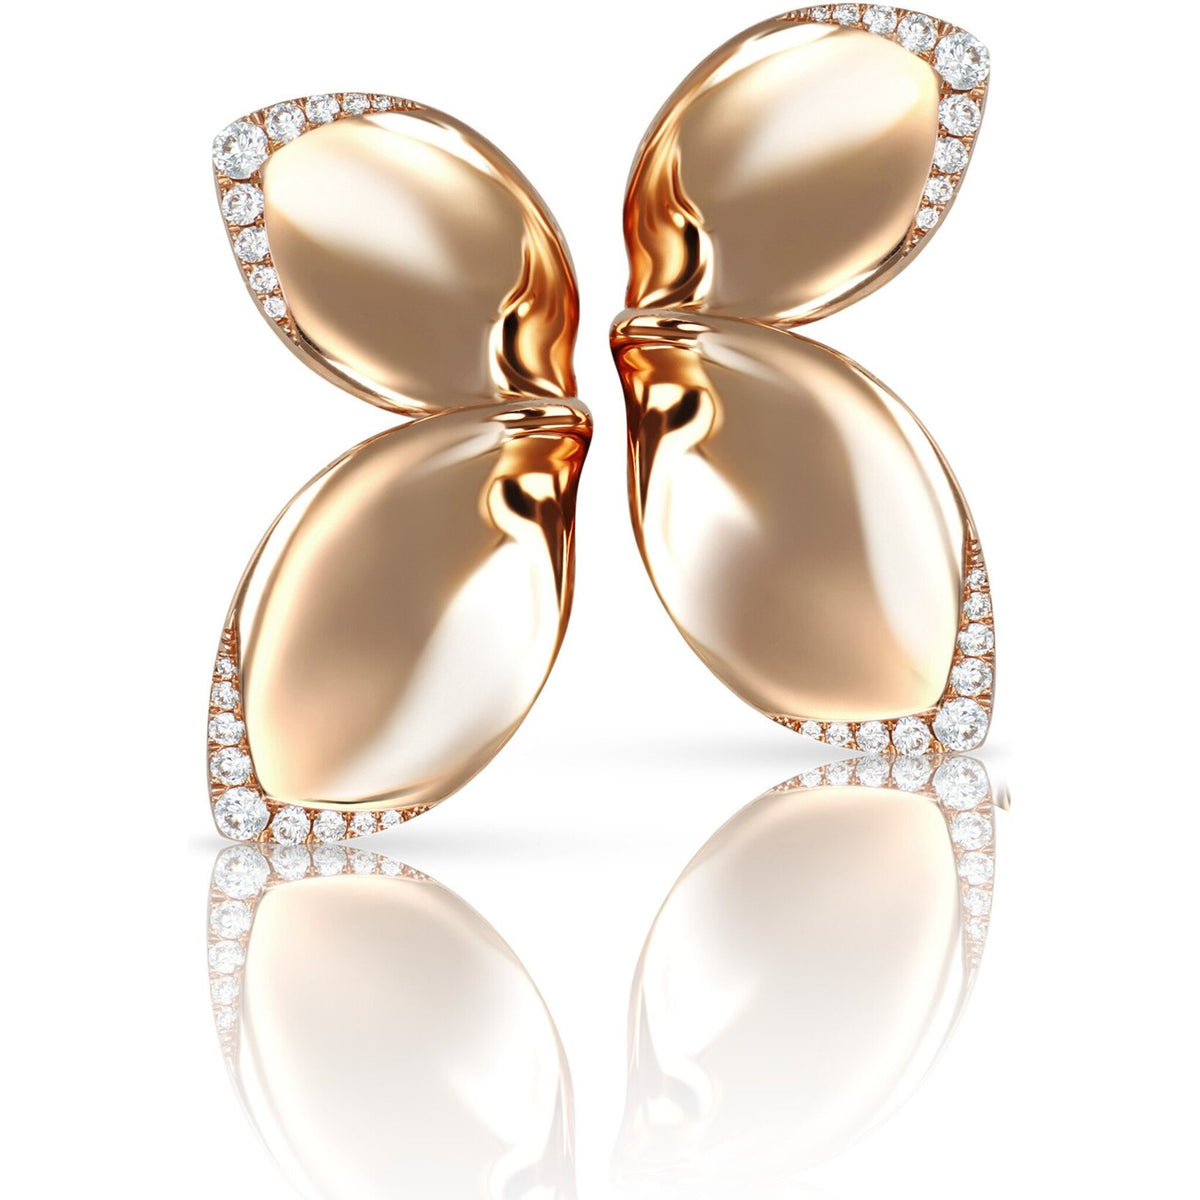 Pasquale Bruni - Giardini Segreti Earrings in 18k Rose Gold with White Diamonds